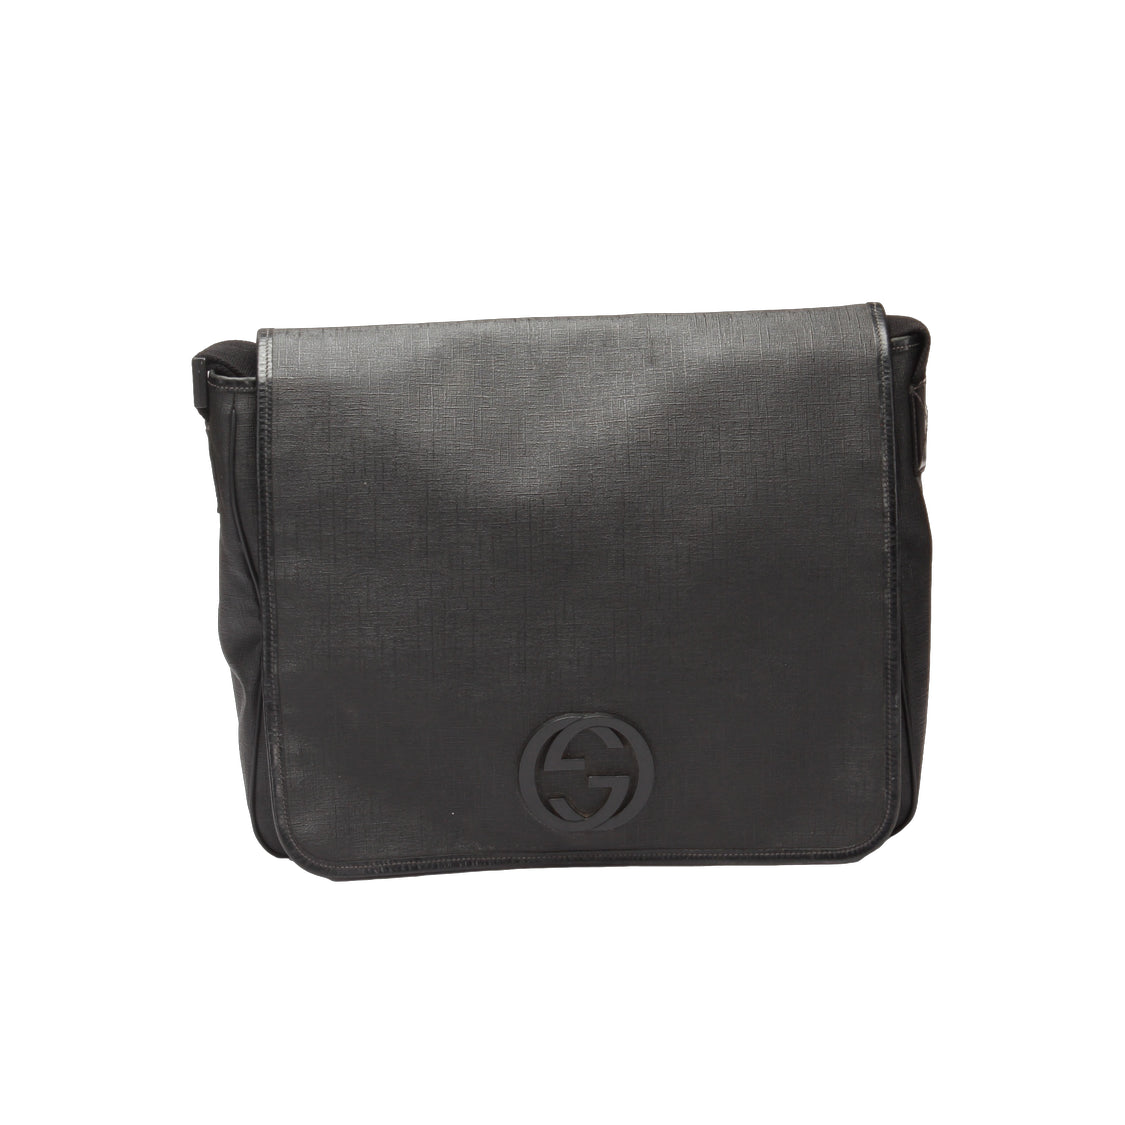 Gucci Interlocking G Flap Messenger Bag Canvas Crossbody Bag 222291 in Fair condition